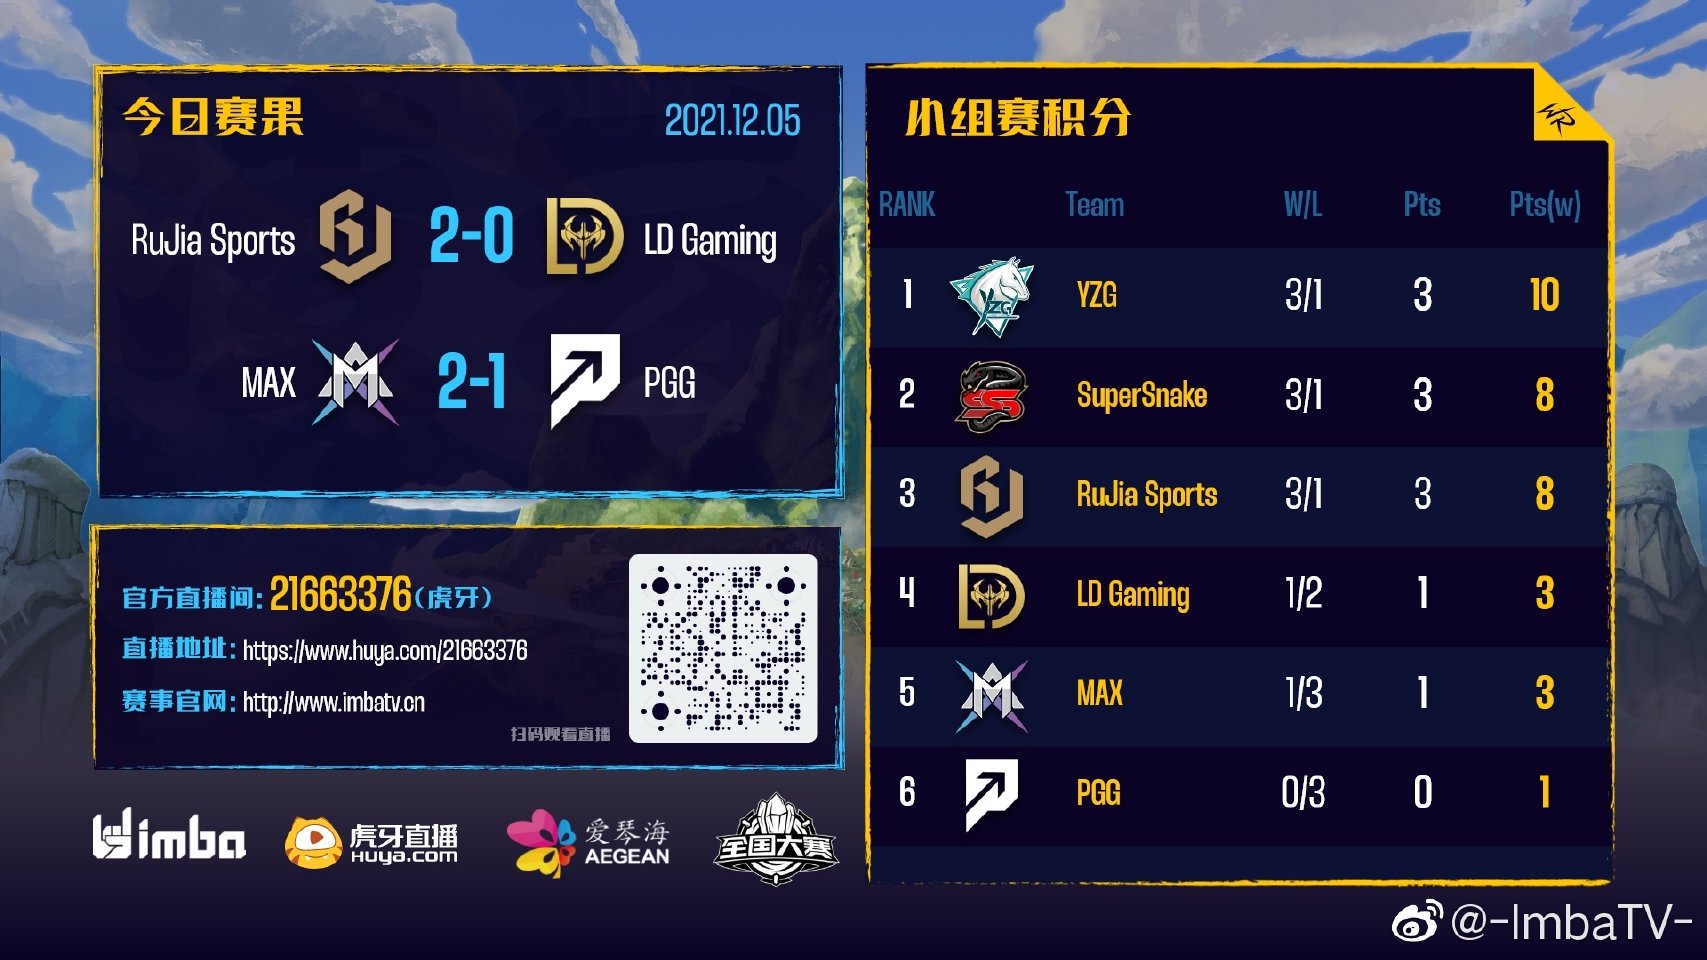 “-ImbaTV-: 凌云杯今天的比赛结束，赛果如下：Rujia 2-0 LD GamingMAX 2-1 PGG目前的积分榜单...